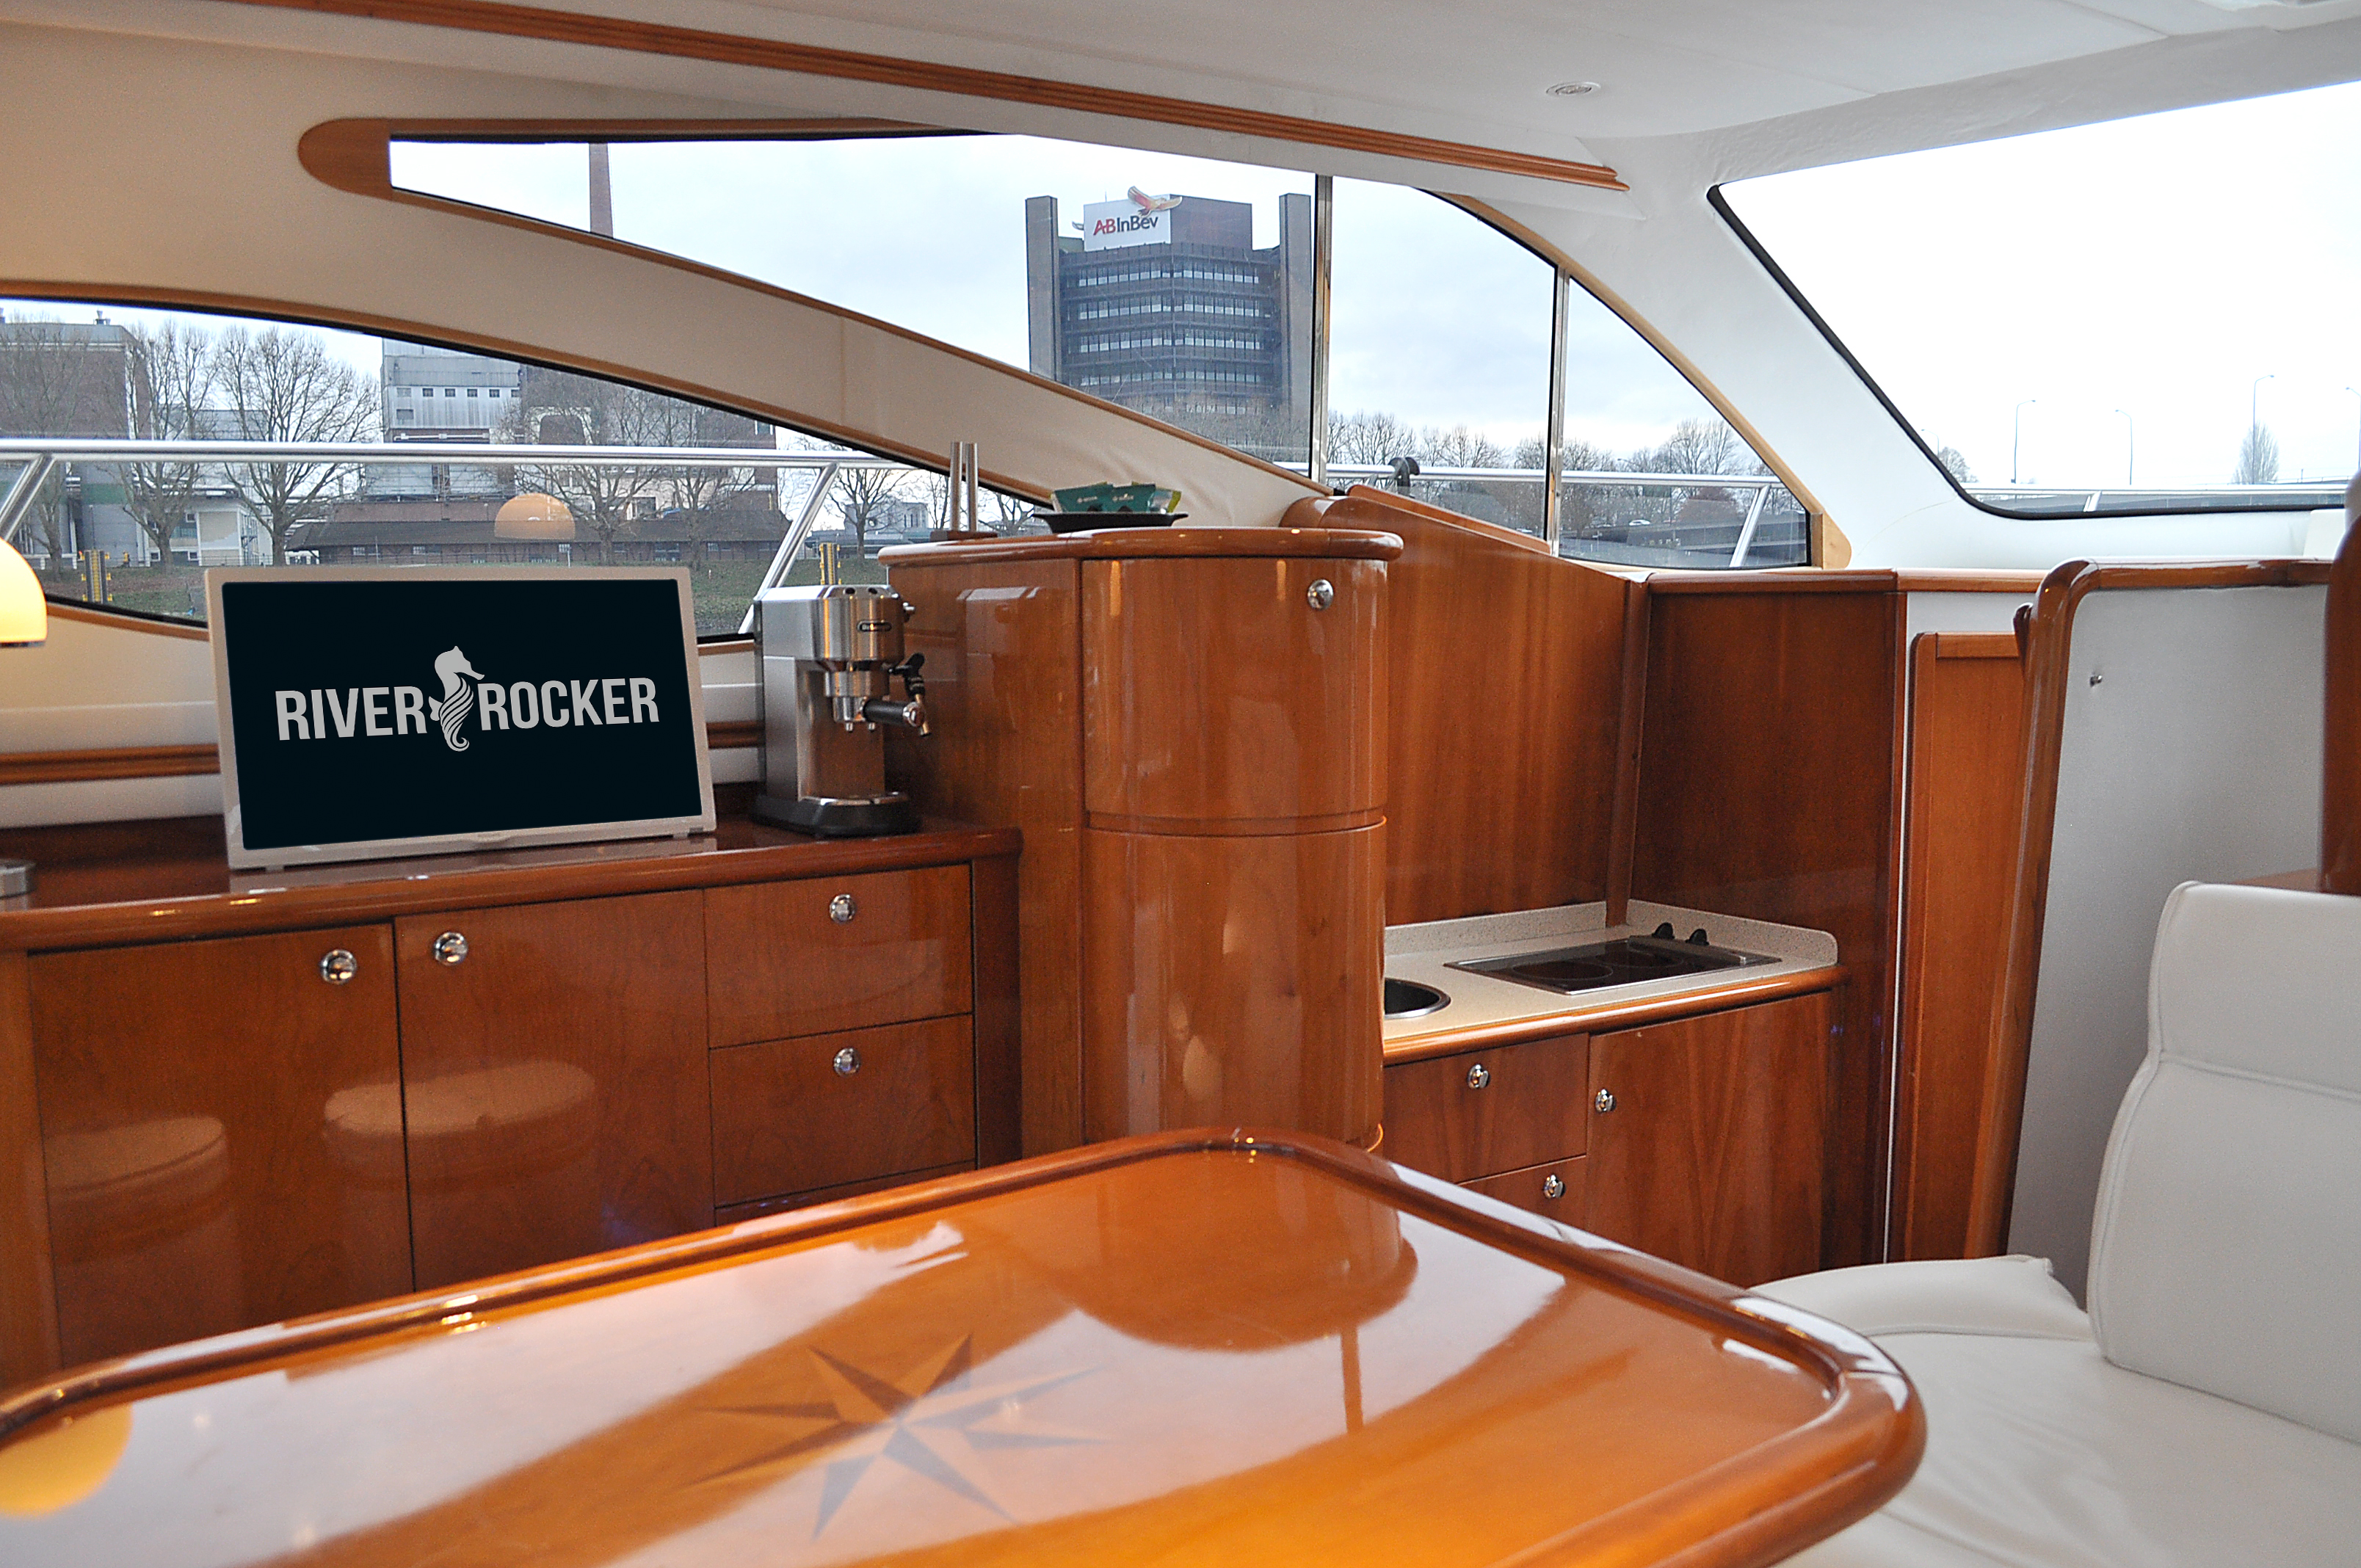 Luxus Yacht